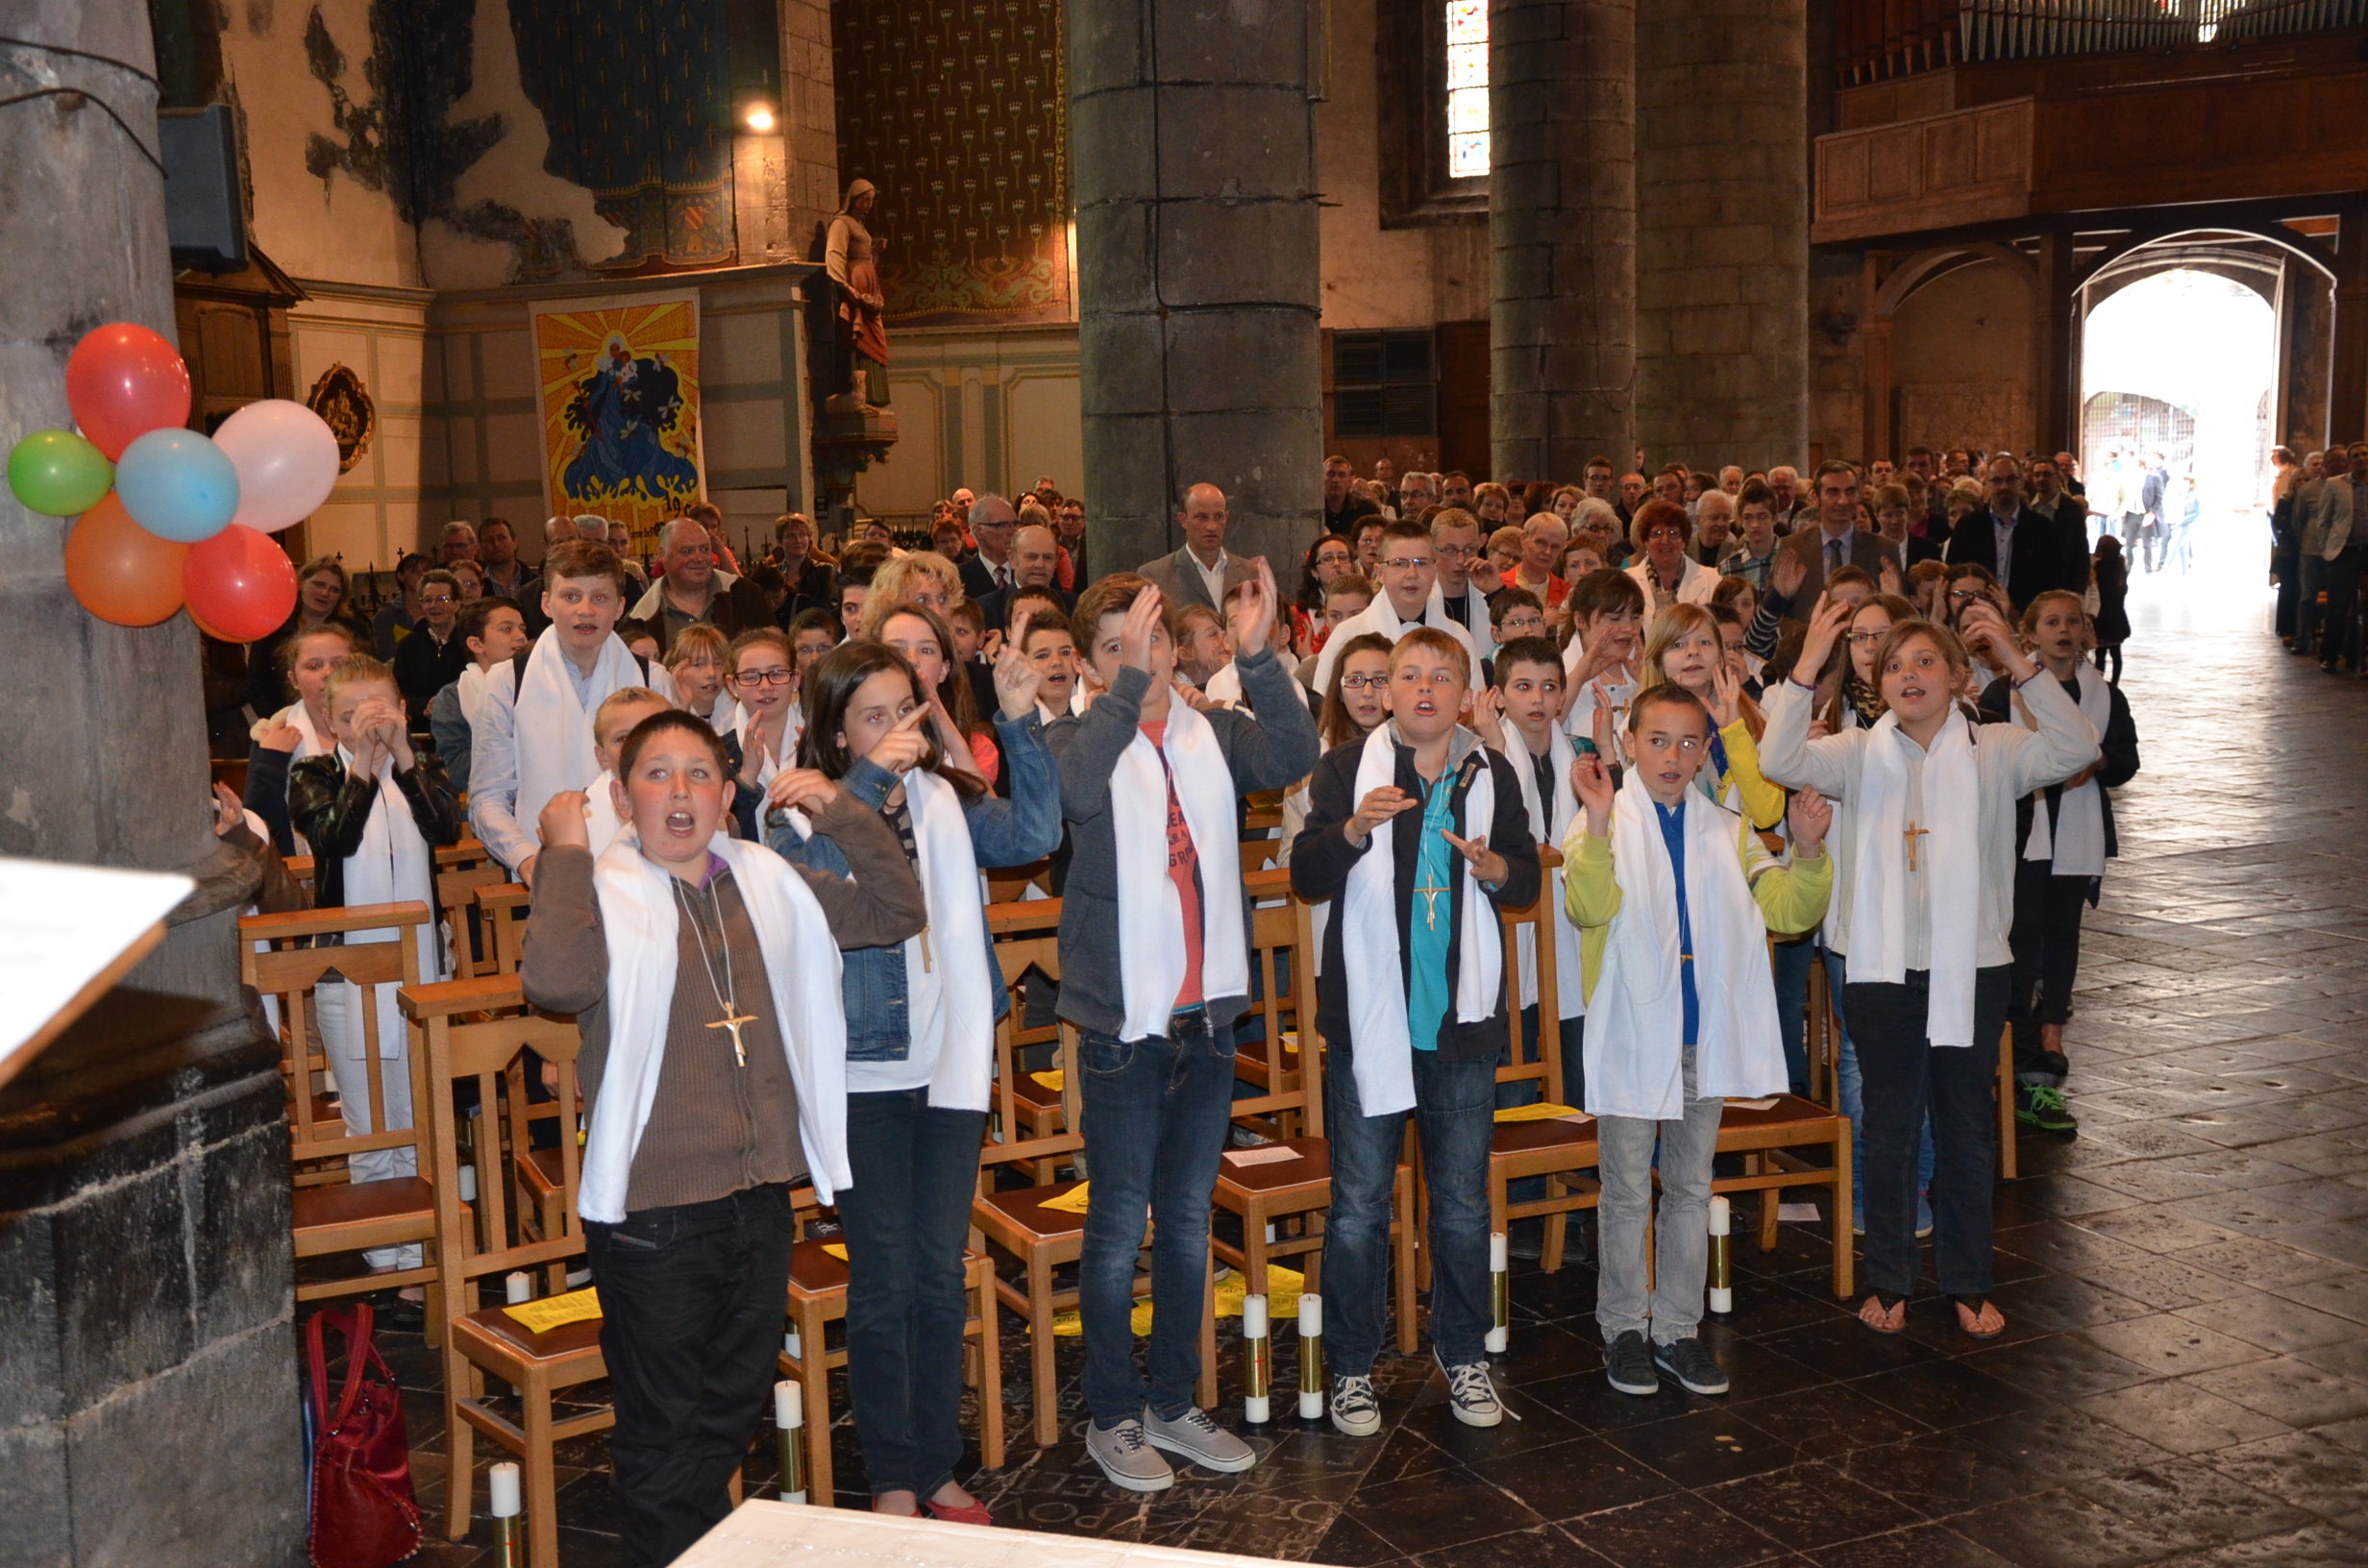 4 mai 2013 à Avesnes
une centaine de jeunes